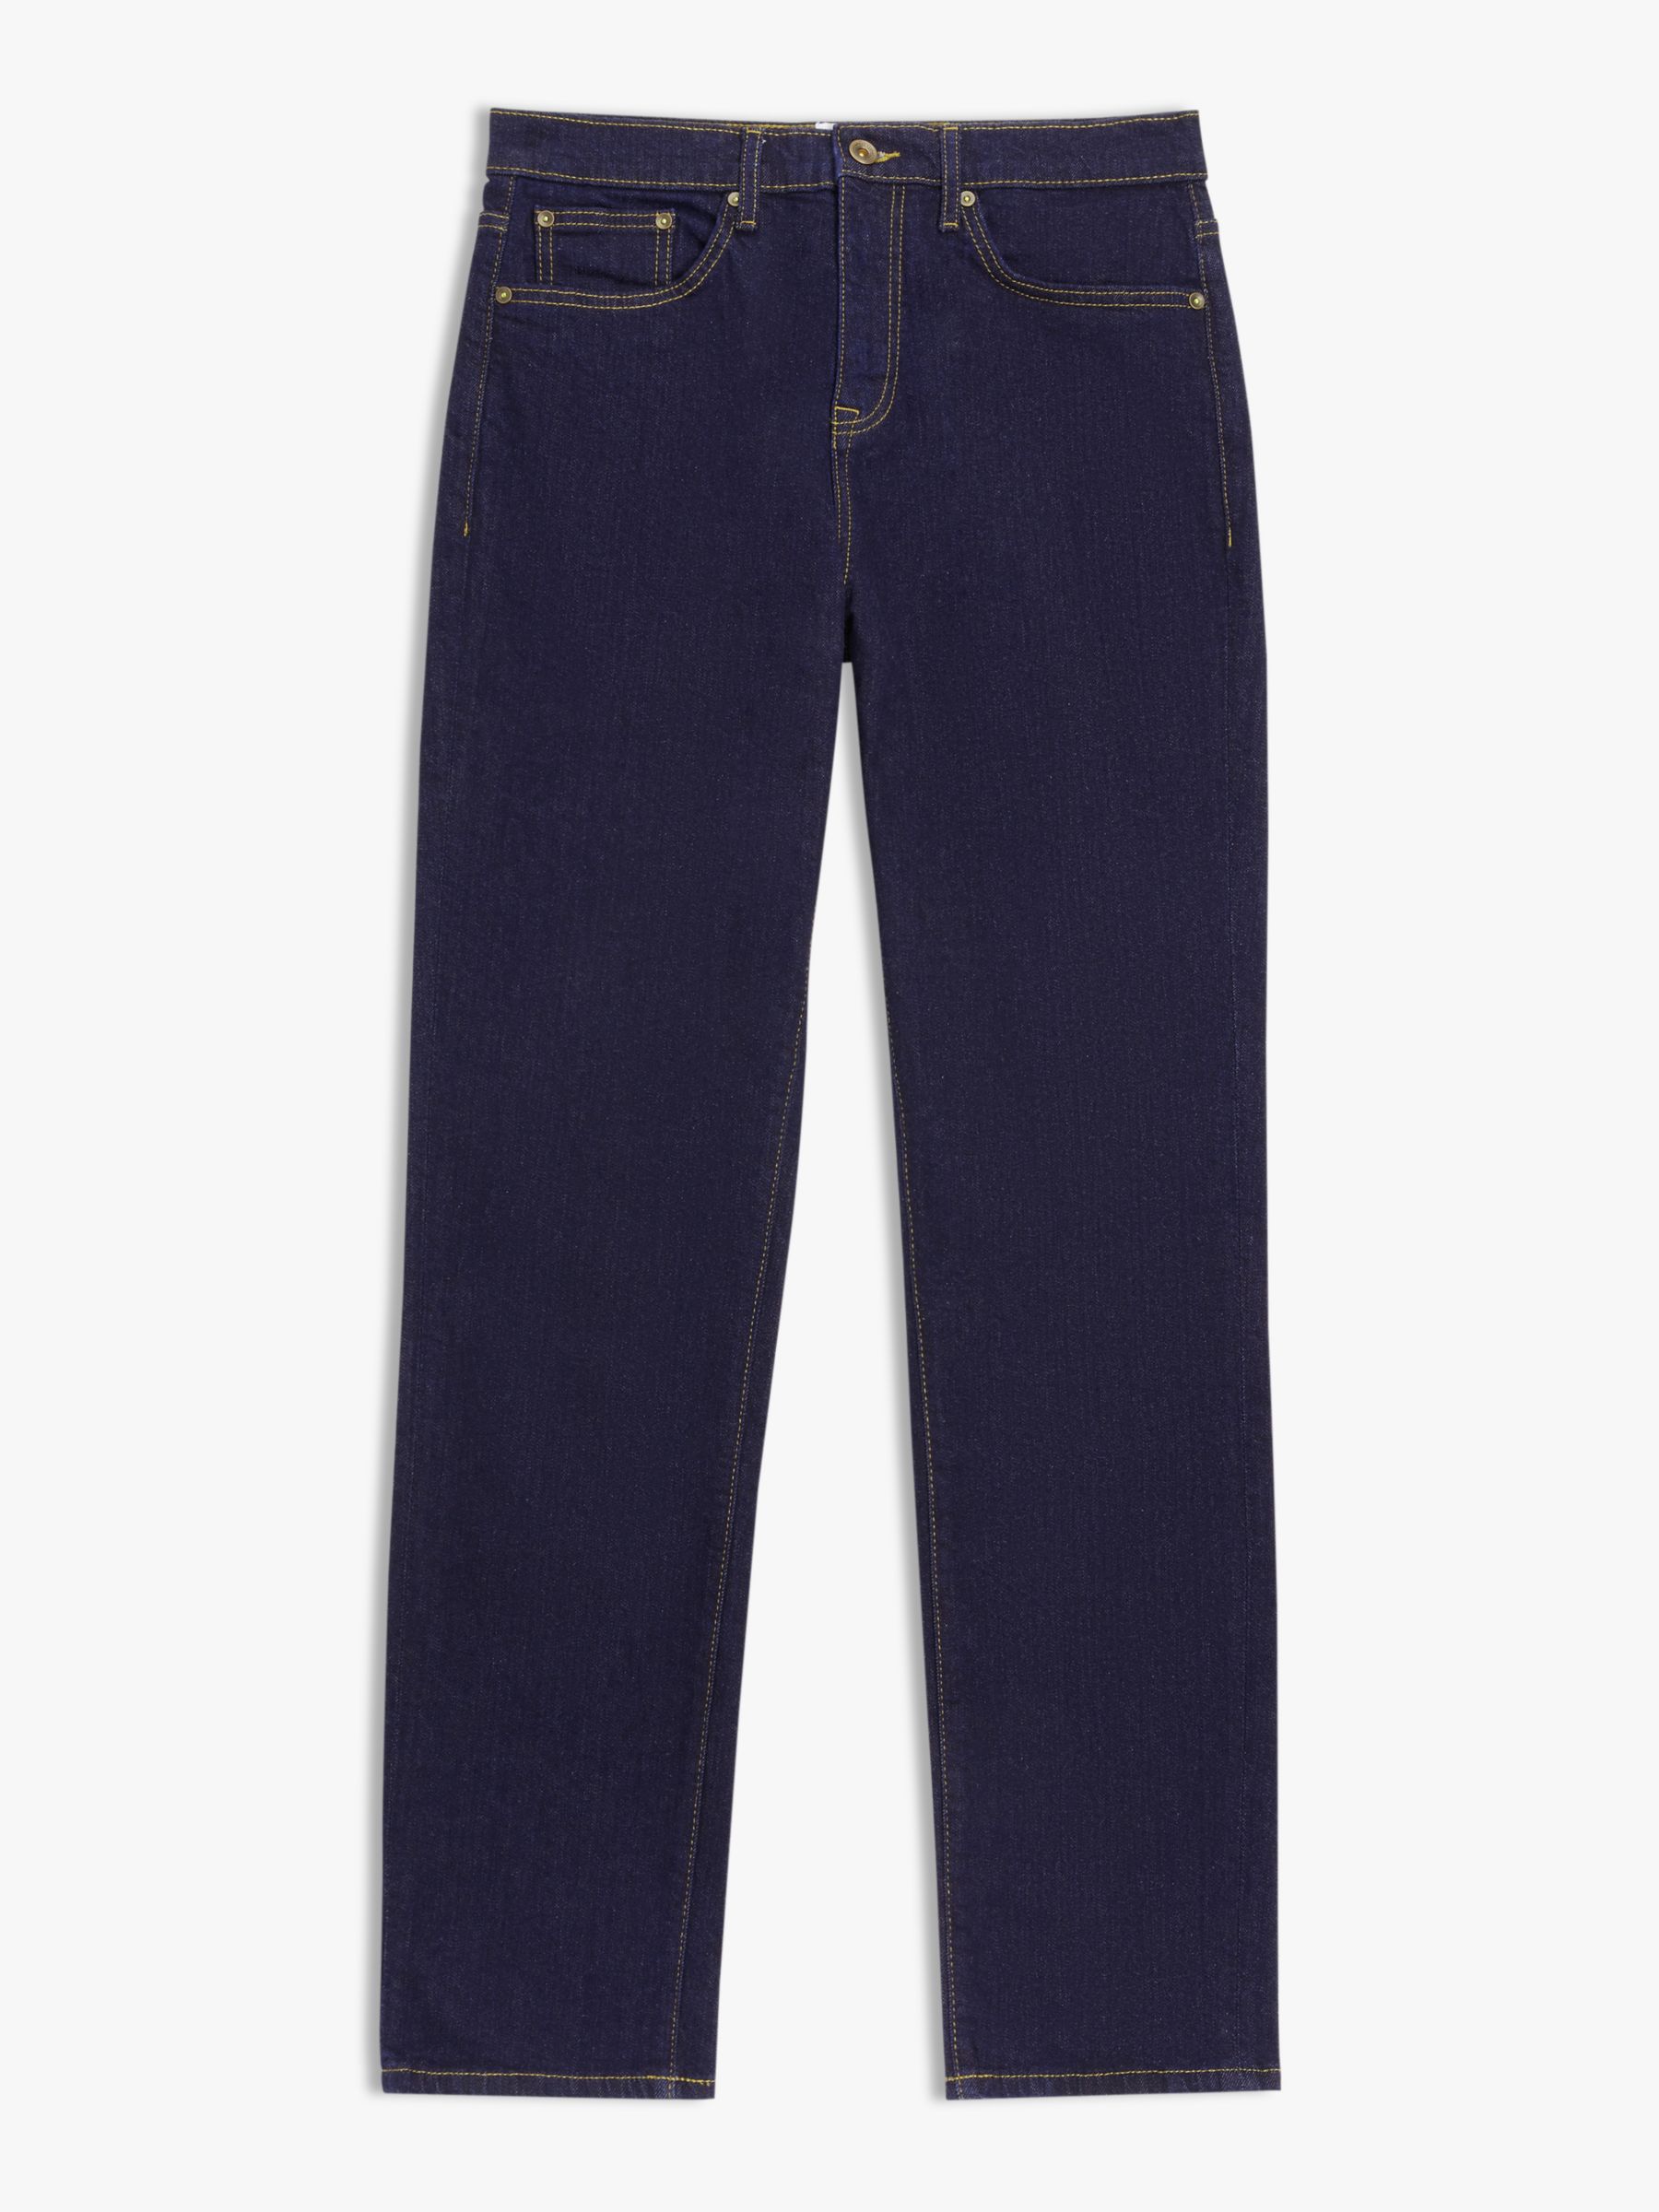 John Lewis Slim Fit Denim Jeans, Blue at John Lewis & Partners